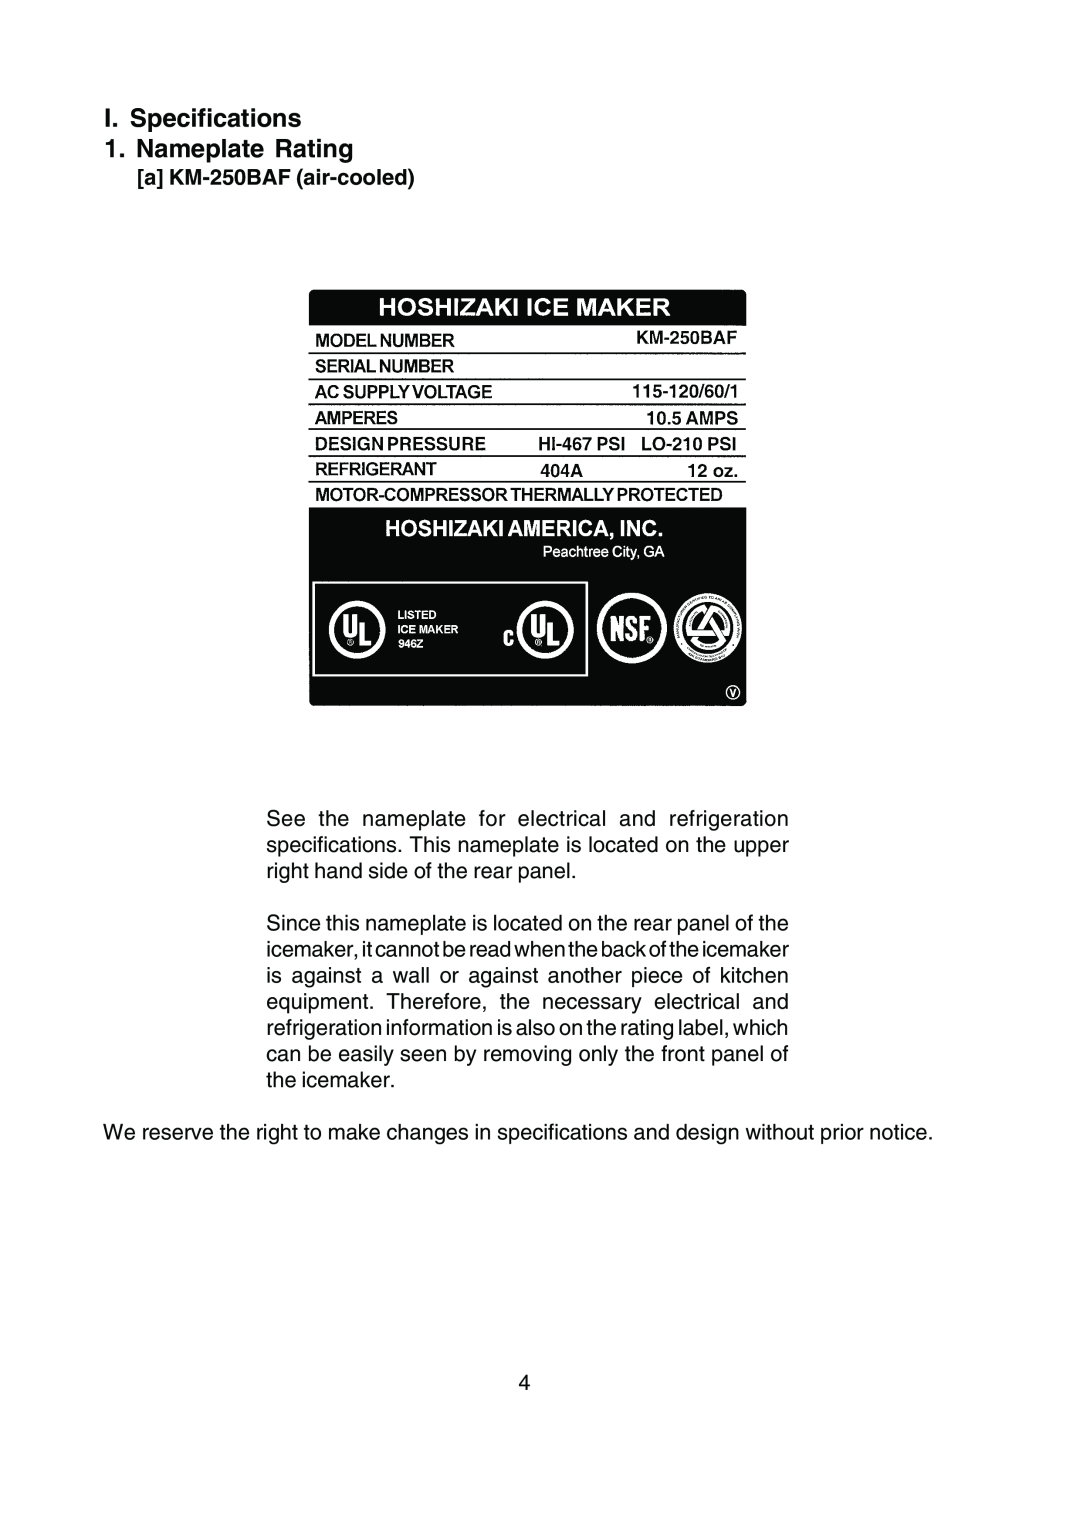 Hoshizaki KM-250BWF instruction manual I. Specifications 1.Nameplate Rating, aKM-250BAF air-cooled 